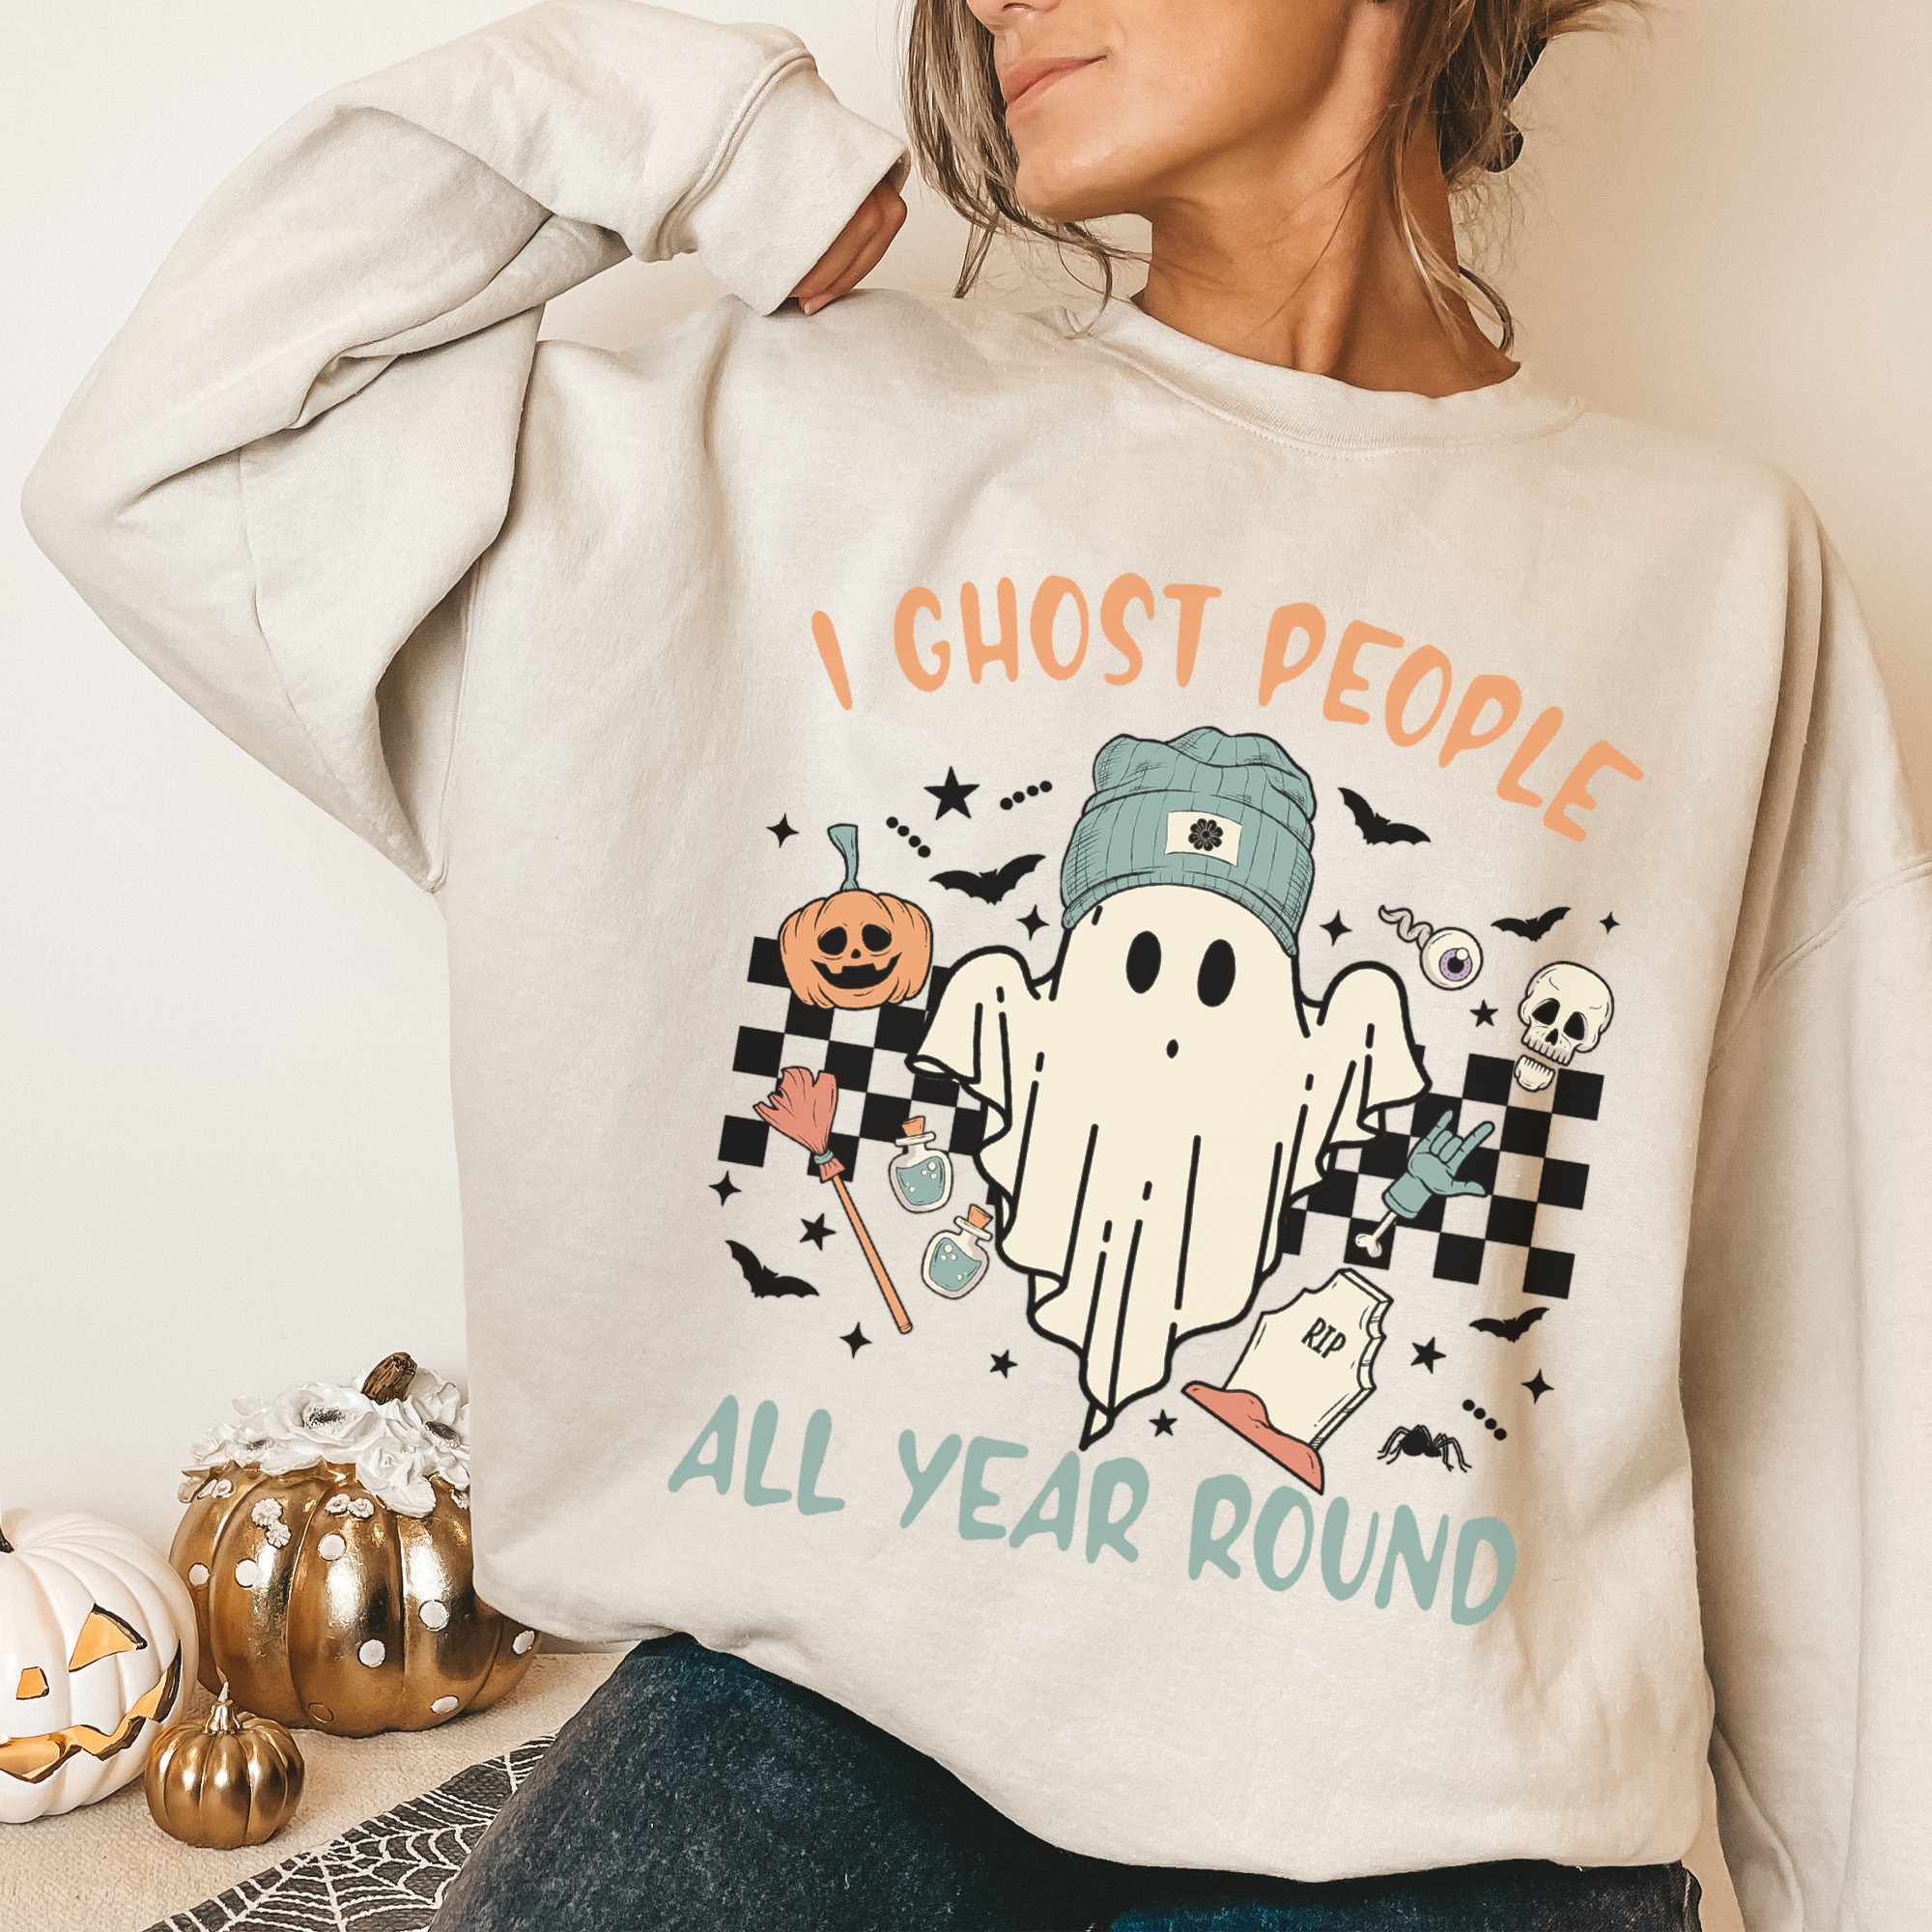 A great Sweatshirt to get in on the Halloween spirit. all SKUs